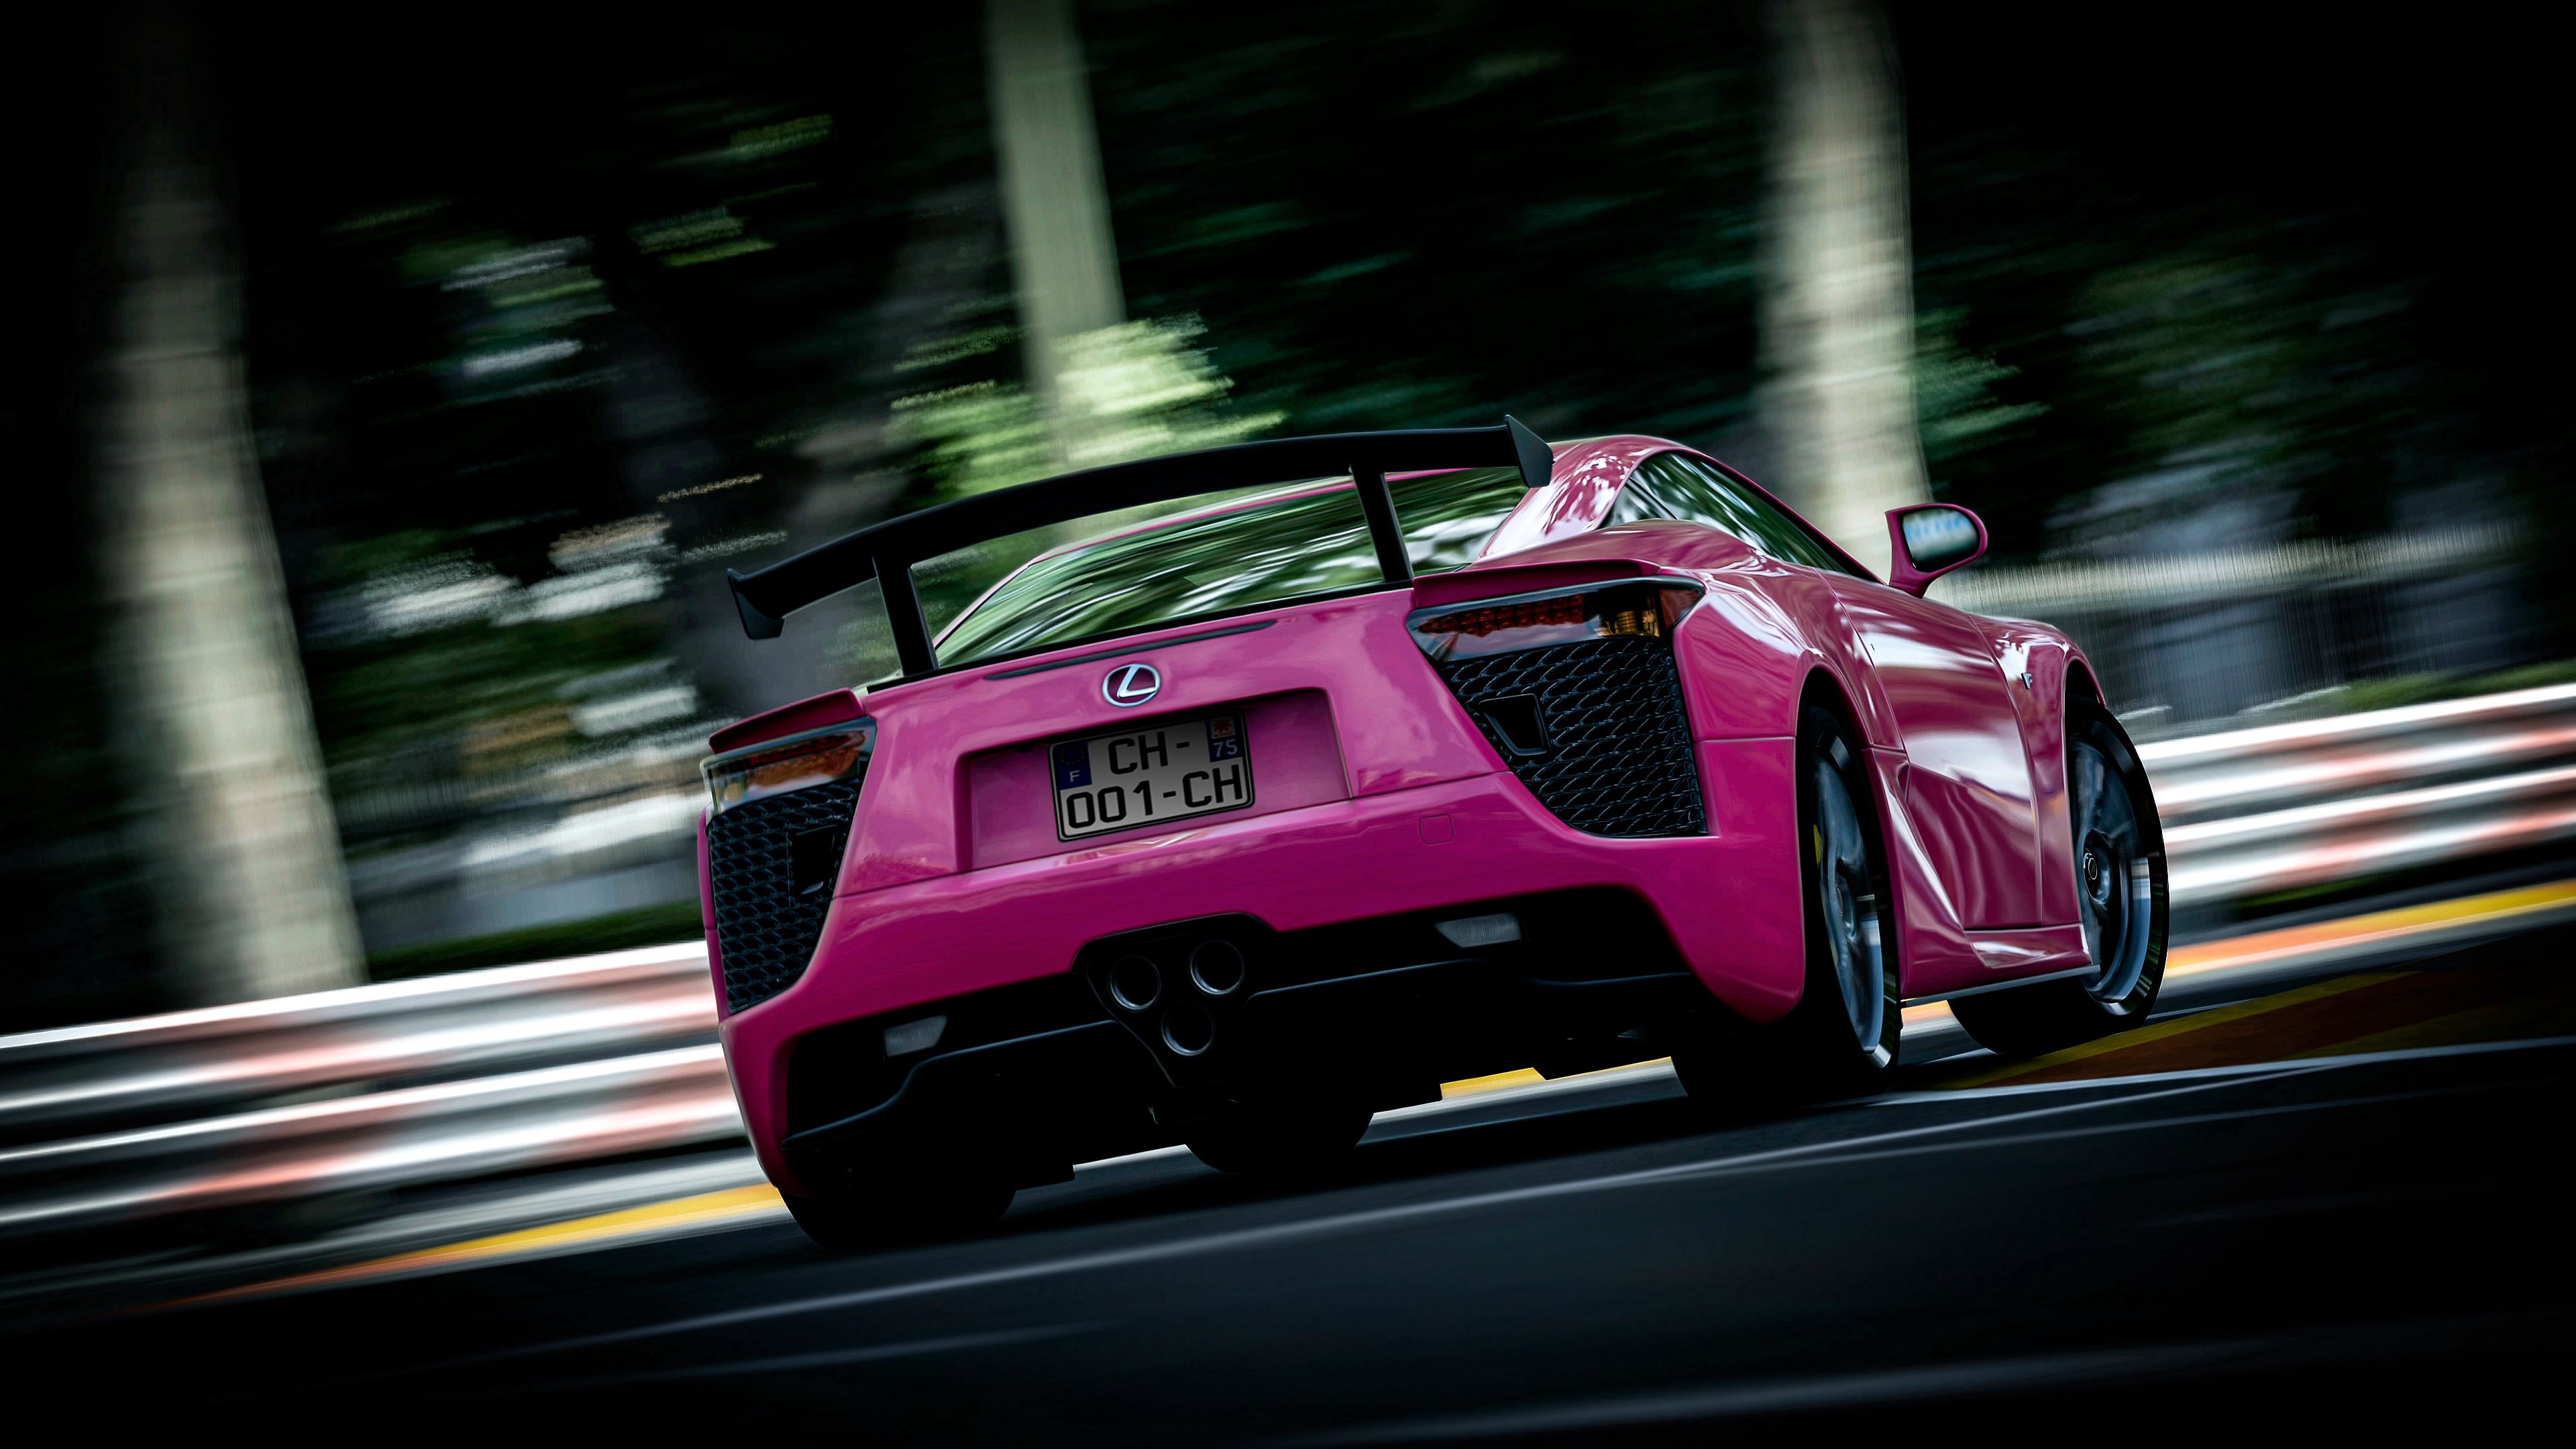 Cool Backgrounds rear view, lexus, cars, blur Pink